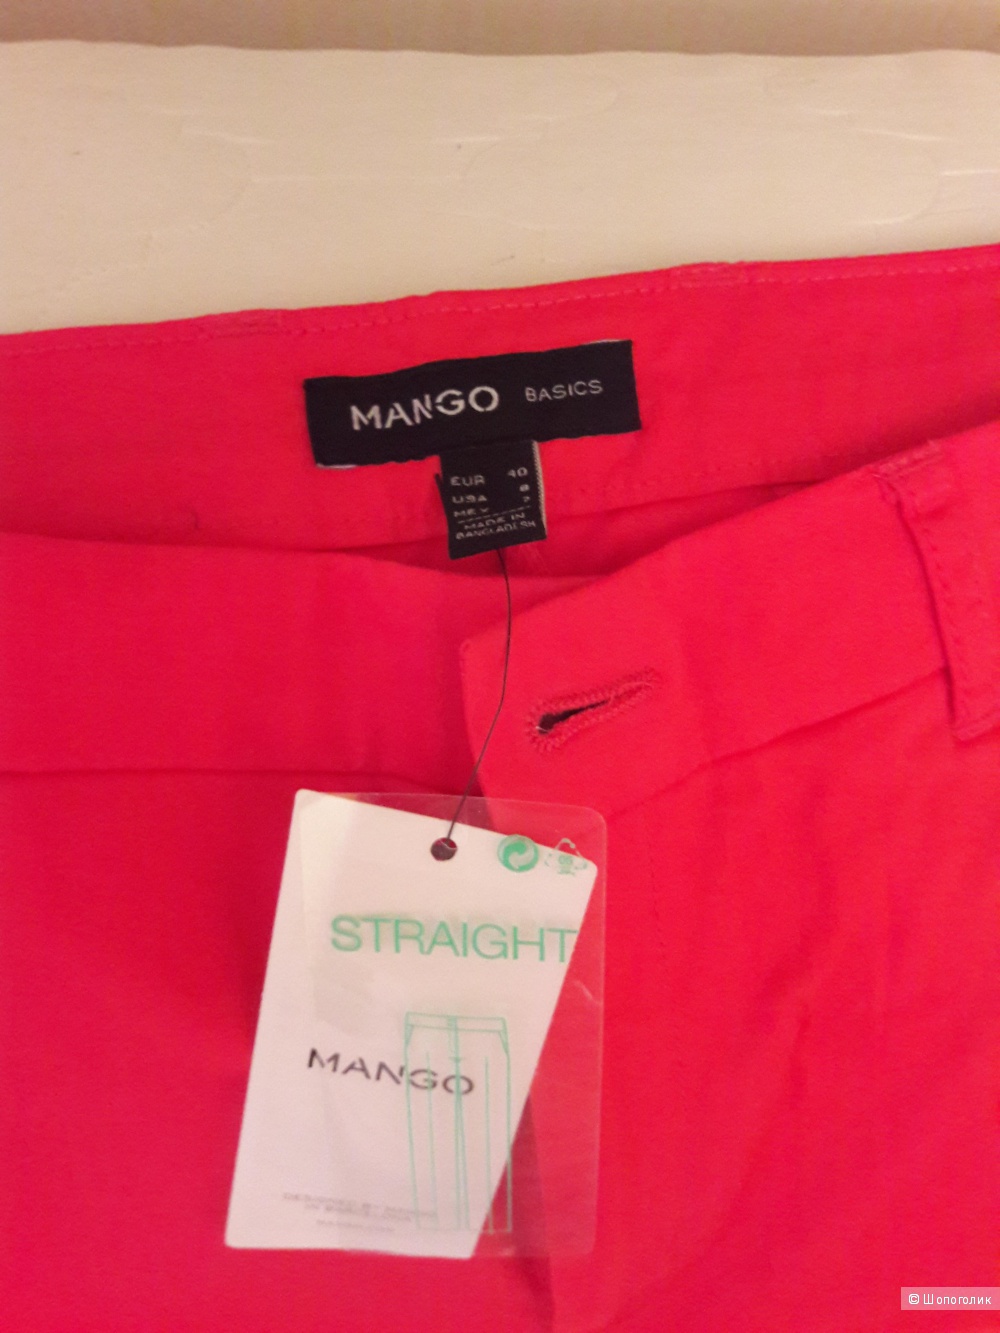 Mango basics: брюки, 40